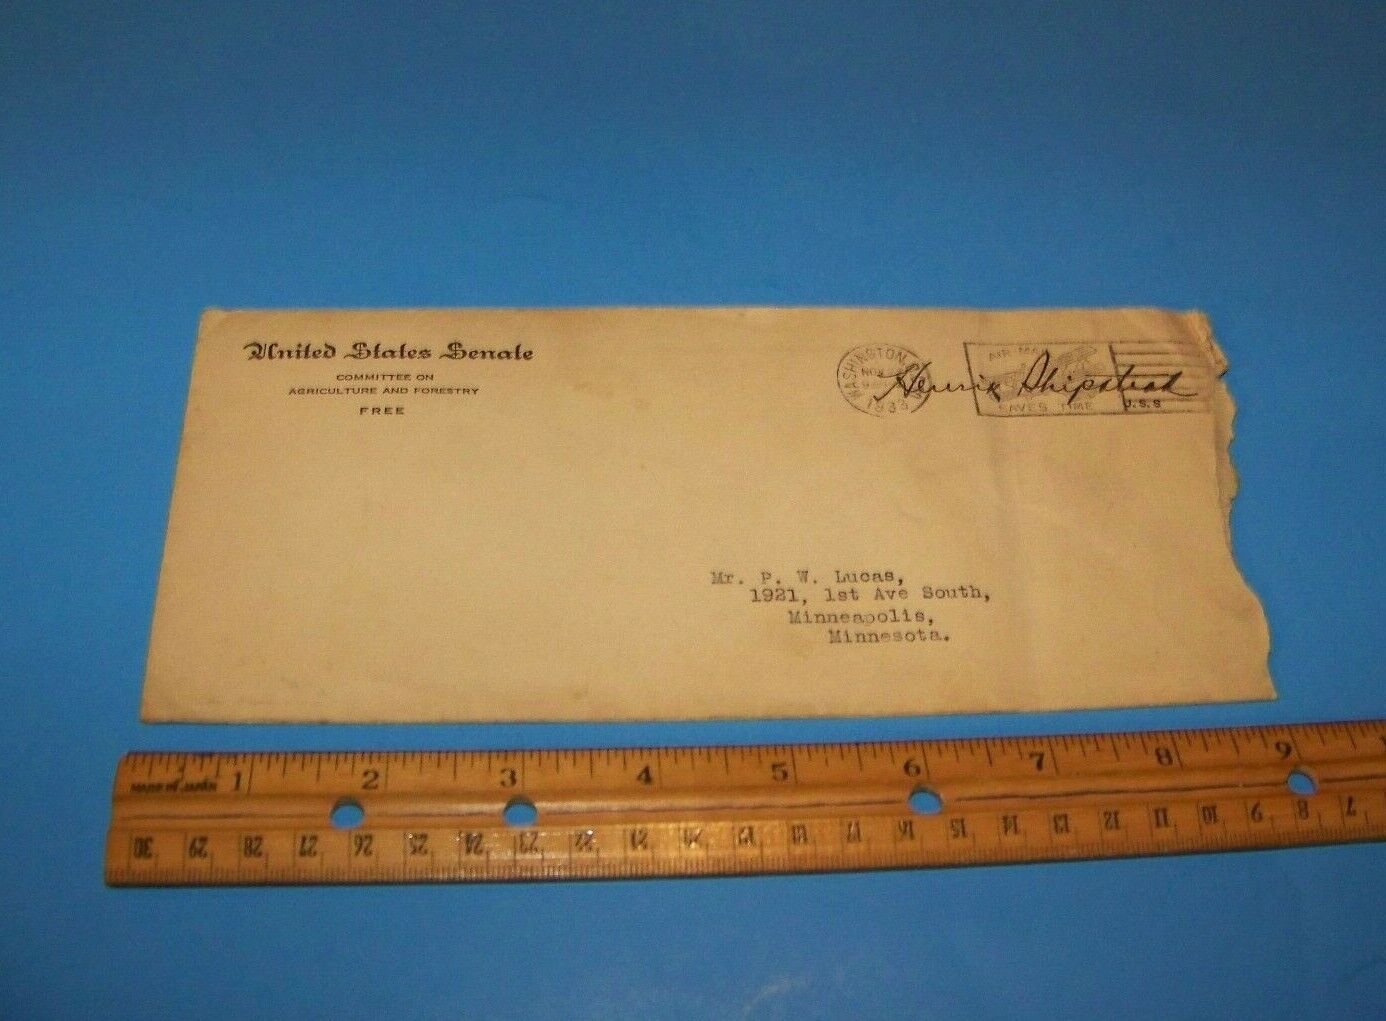  United States Senate  Envelope  Vintage 1933 Air Mail    Minnesota  Signed 